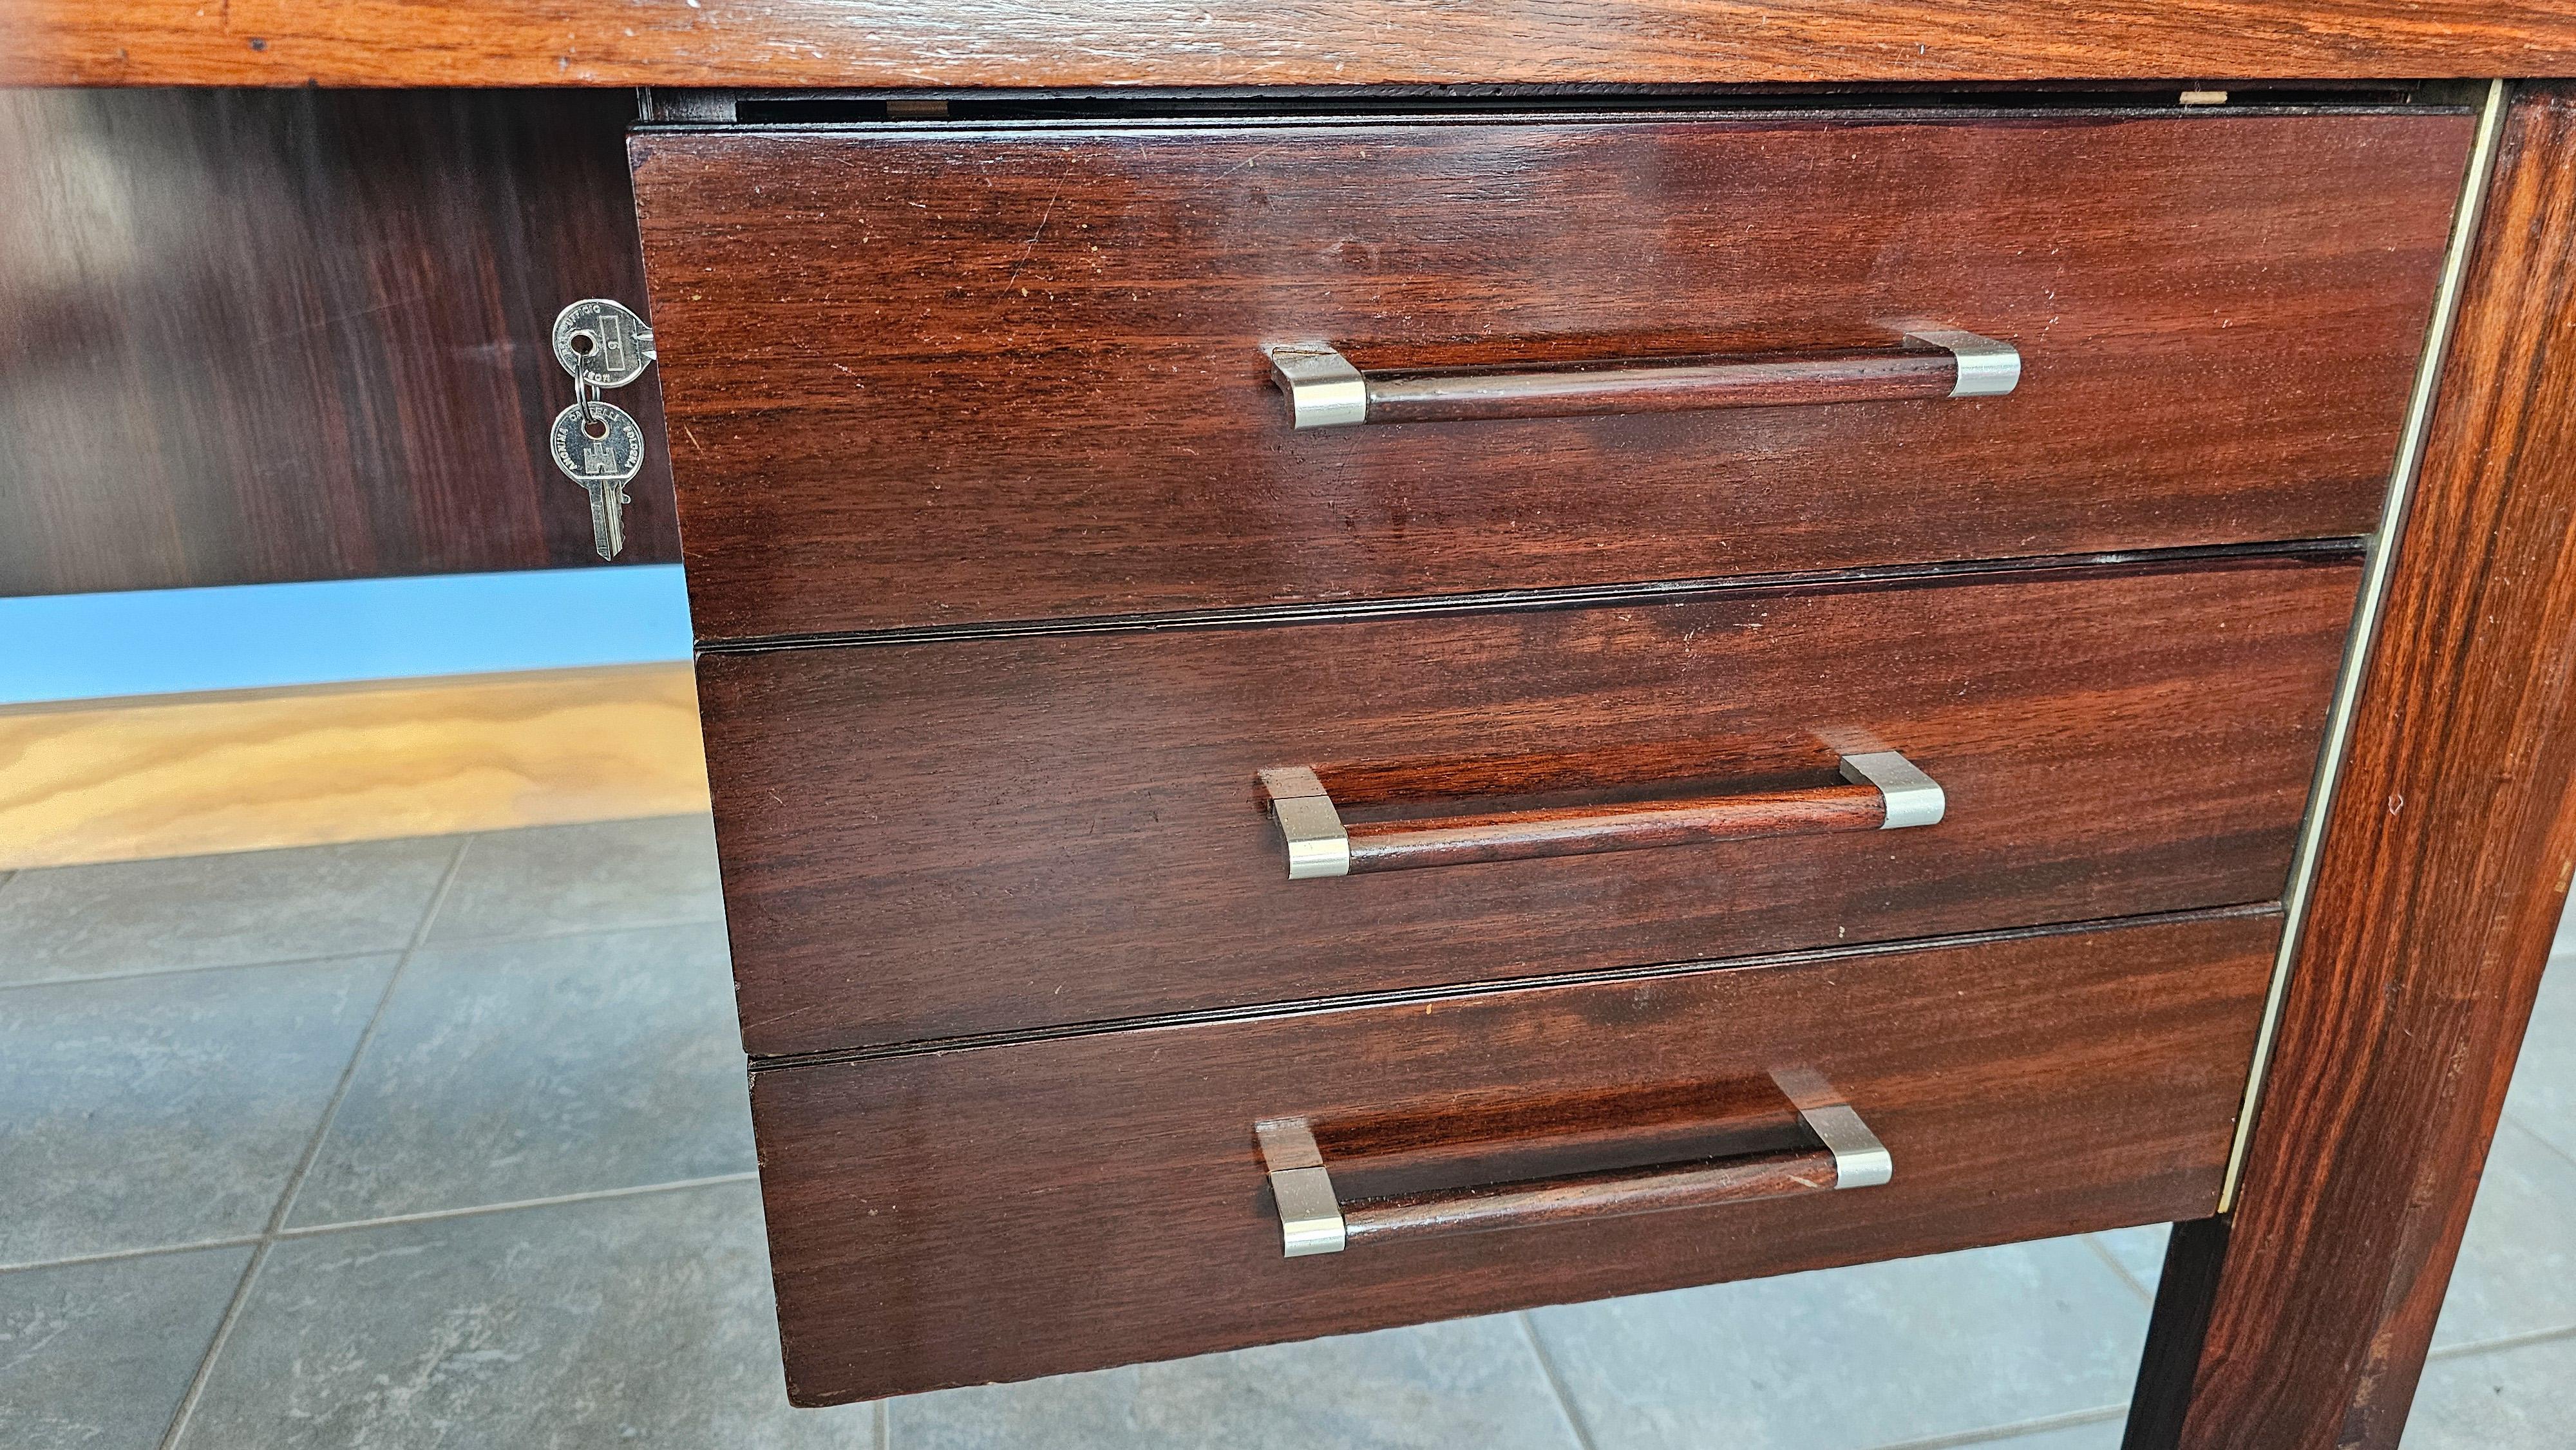 Anonima Castelli Palisander Wood Desk with Elegant Metal Insert Handle, 1970s For Sale 9